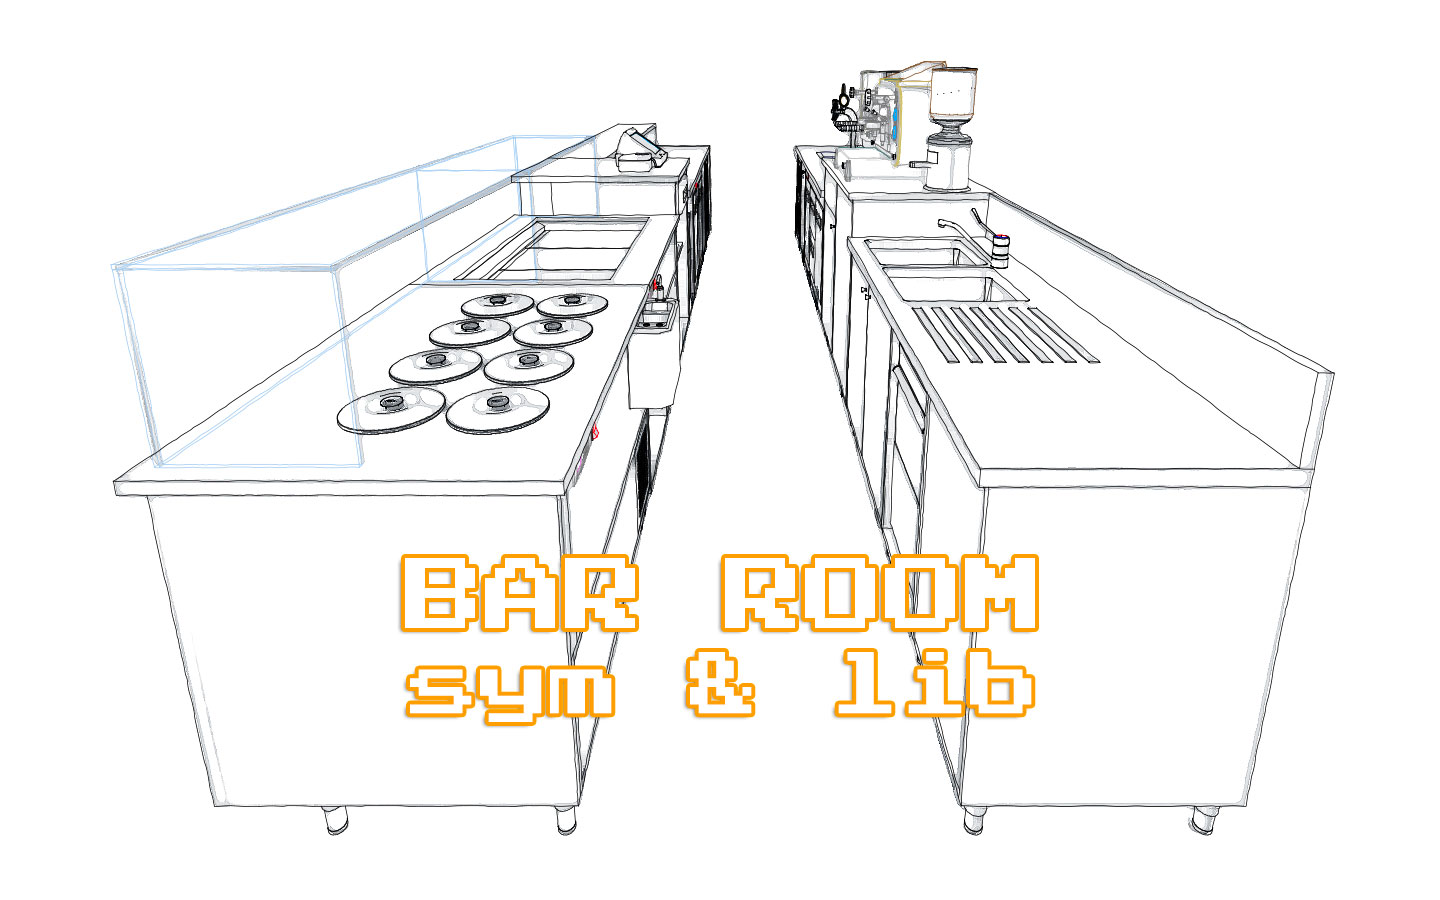 Bar room symbols and libraries: bar rooms modules